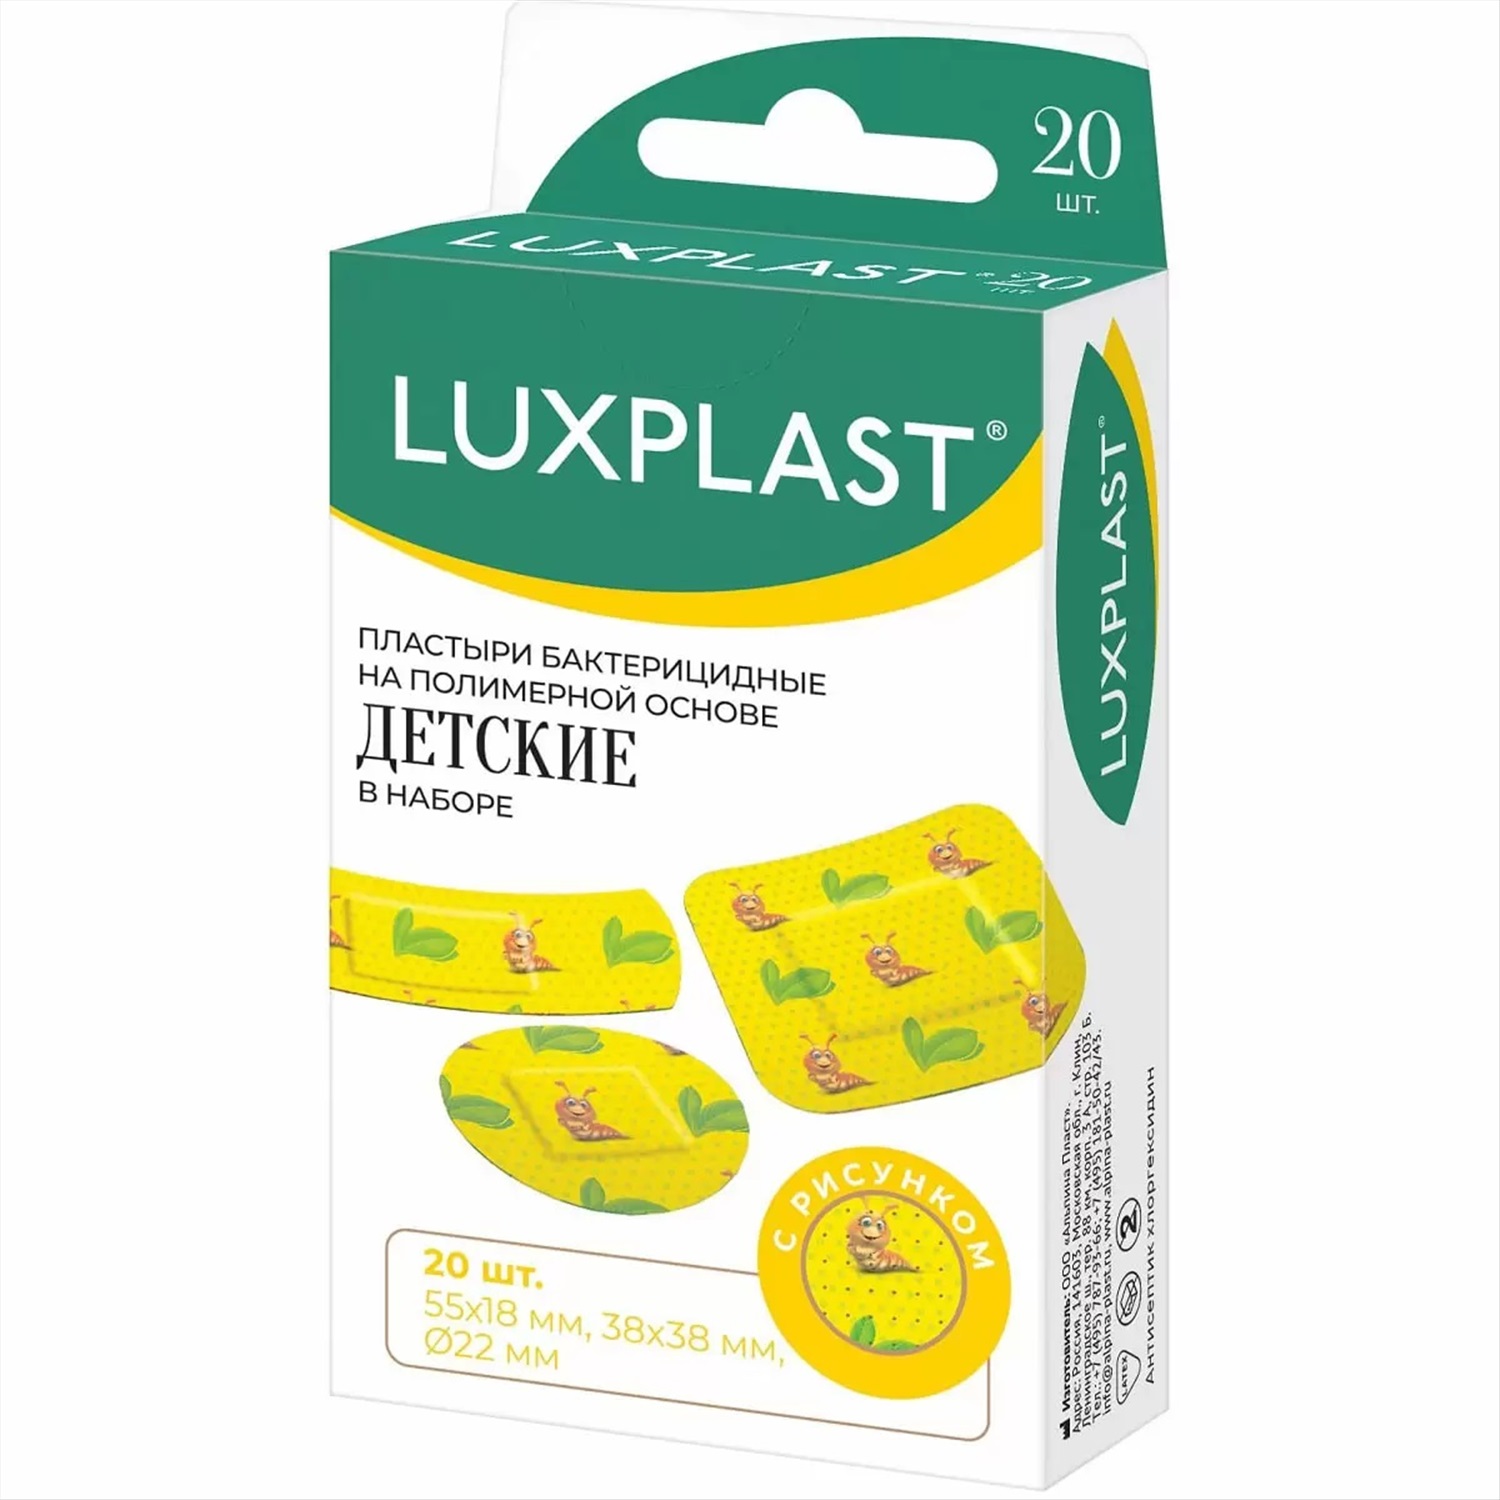 Luxplast пластырь